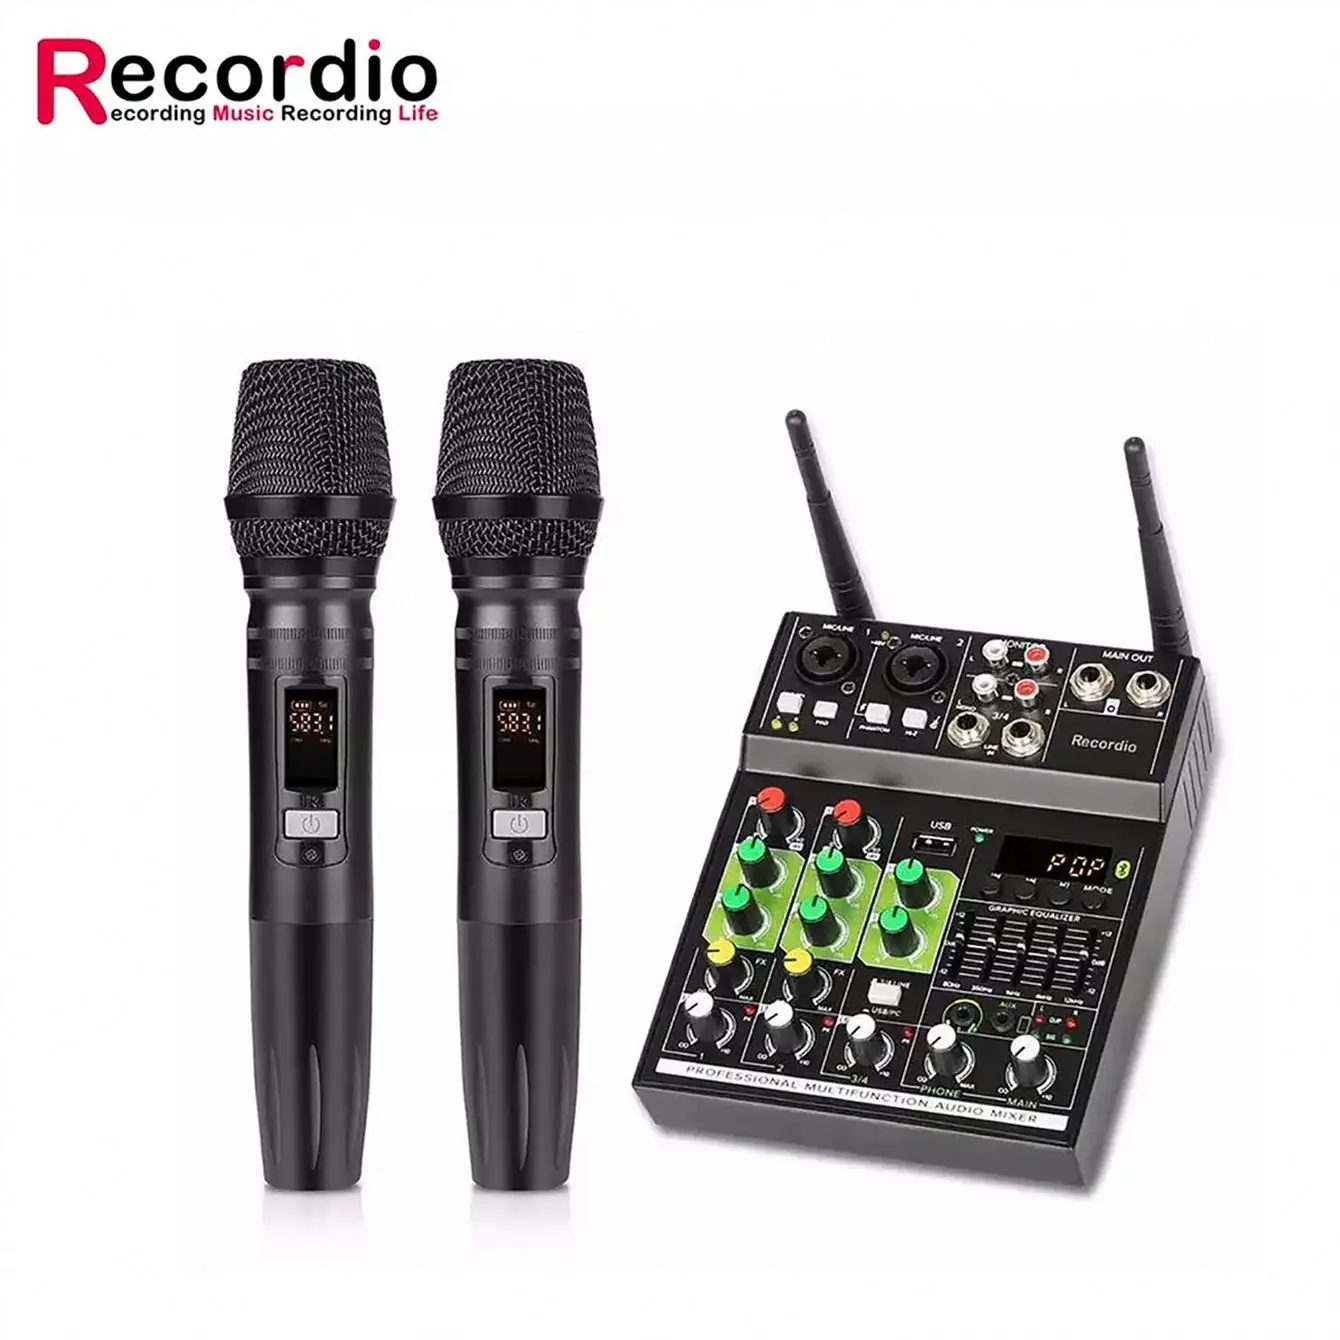 GAX-GT4 Desain Baru Konsol Suara Gema Audio Dsp 8 Saluran Mixer Audio Digital Profesional untuk Penampilan Panggung